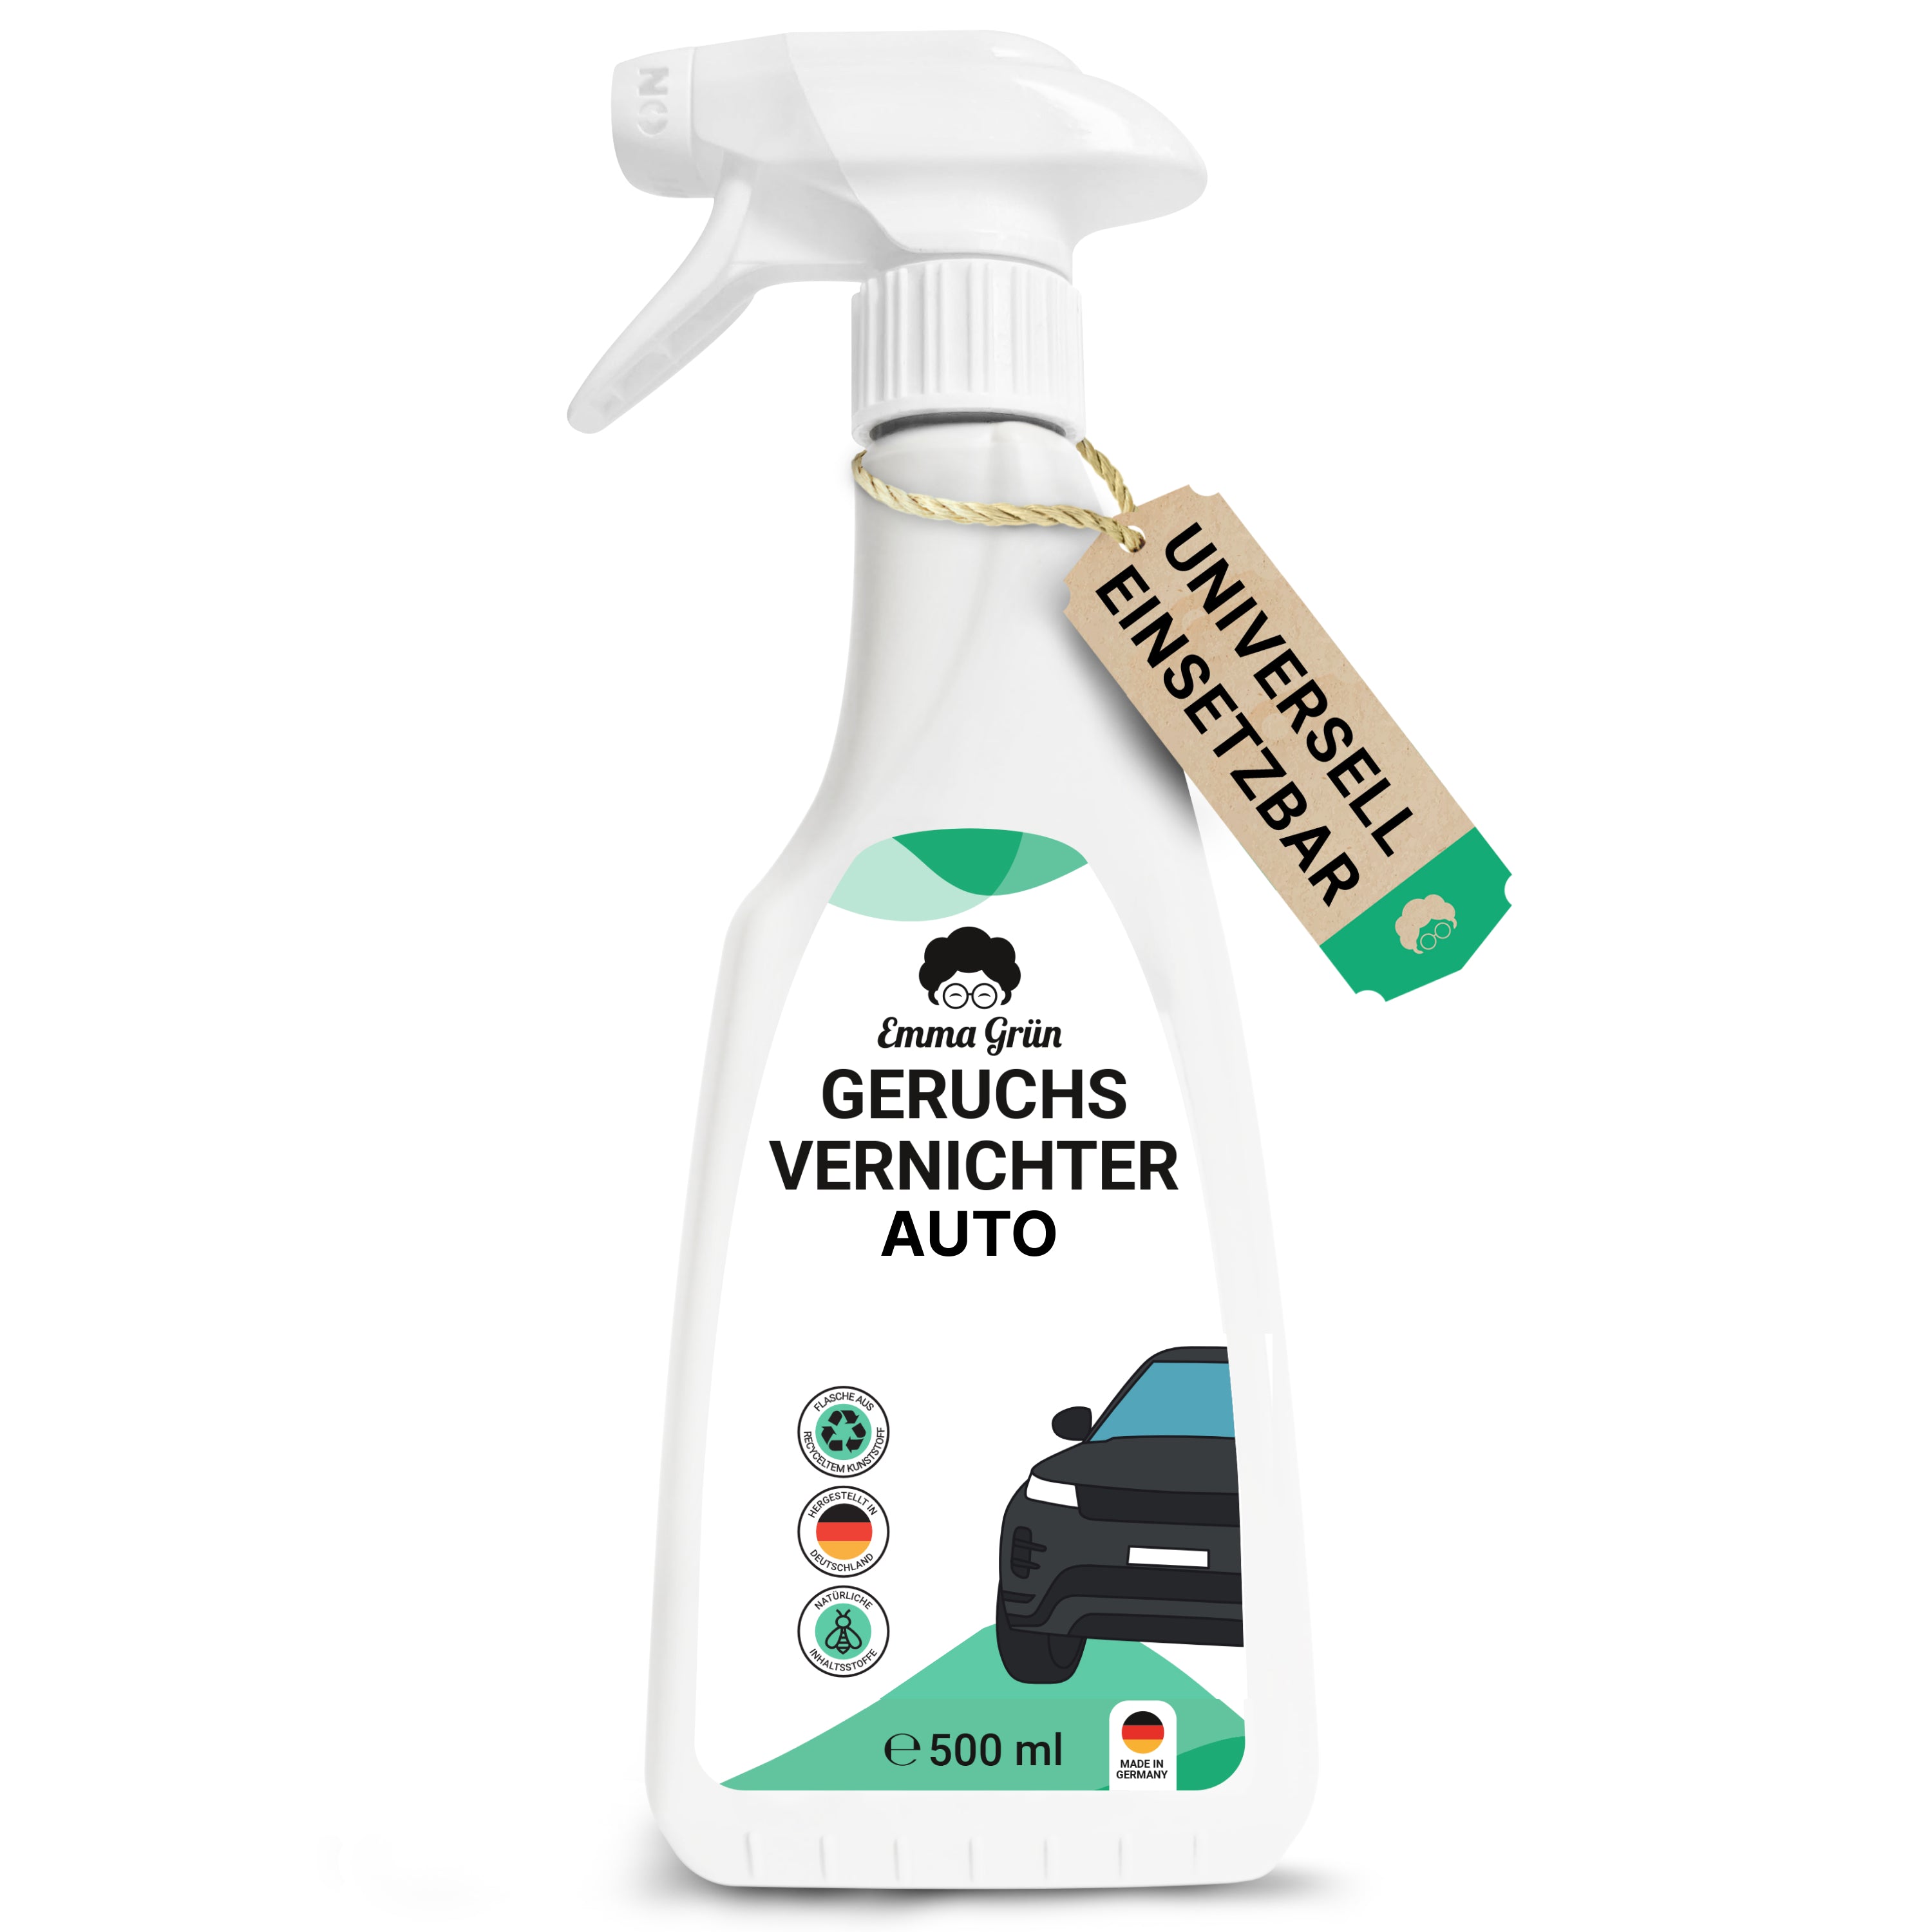 Car odor eliminator 500 ml, odor killer against stubborn odors in the car